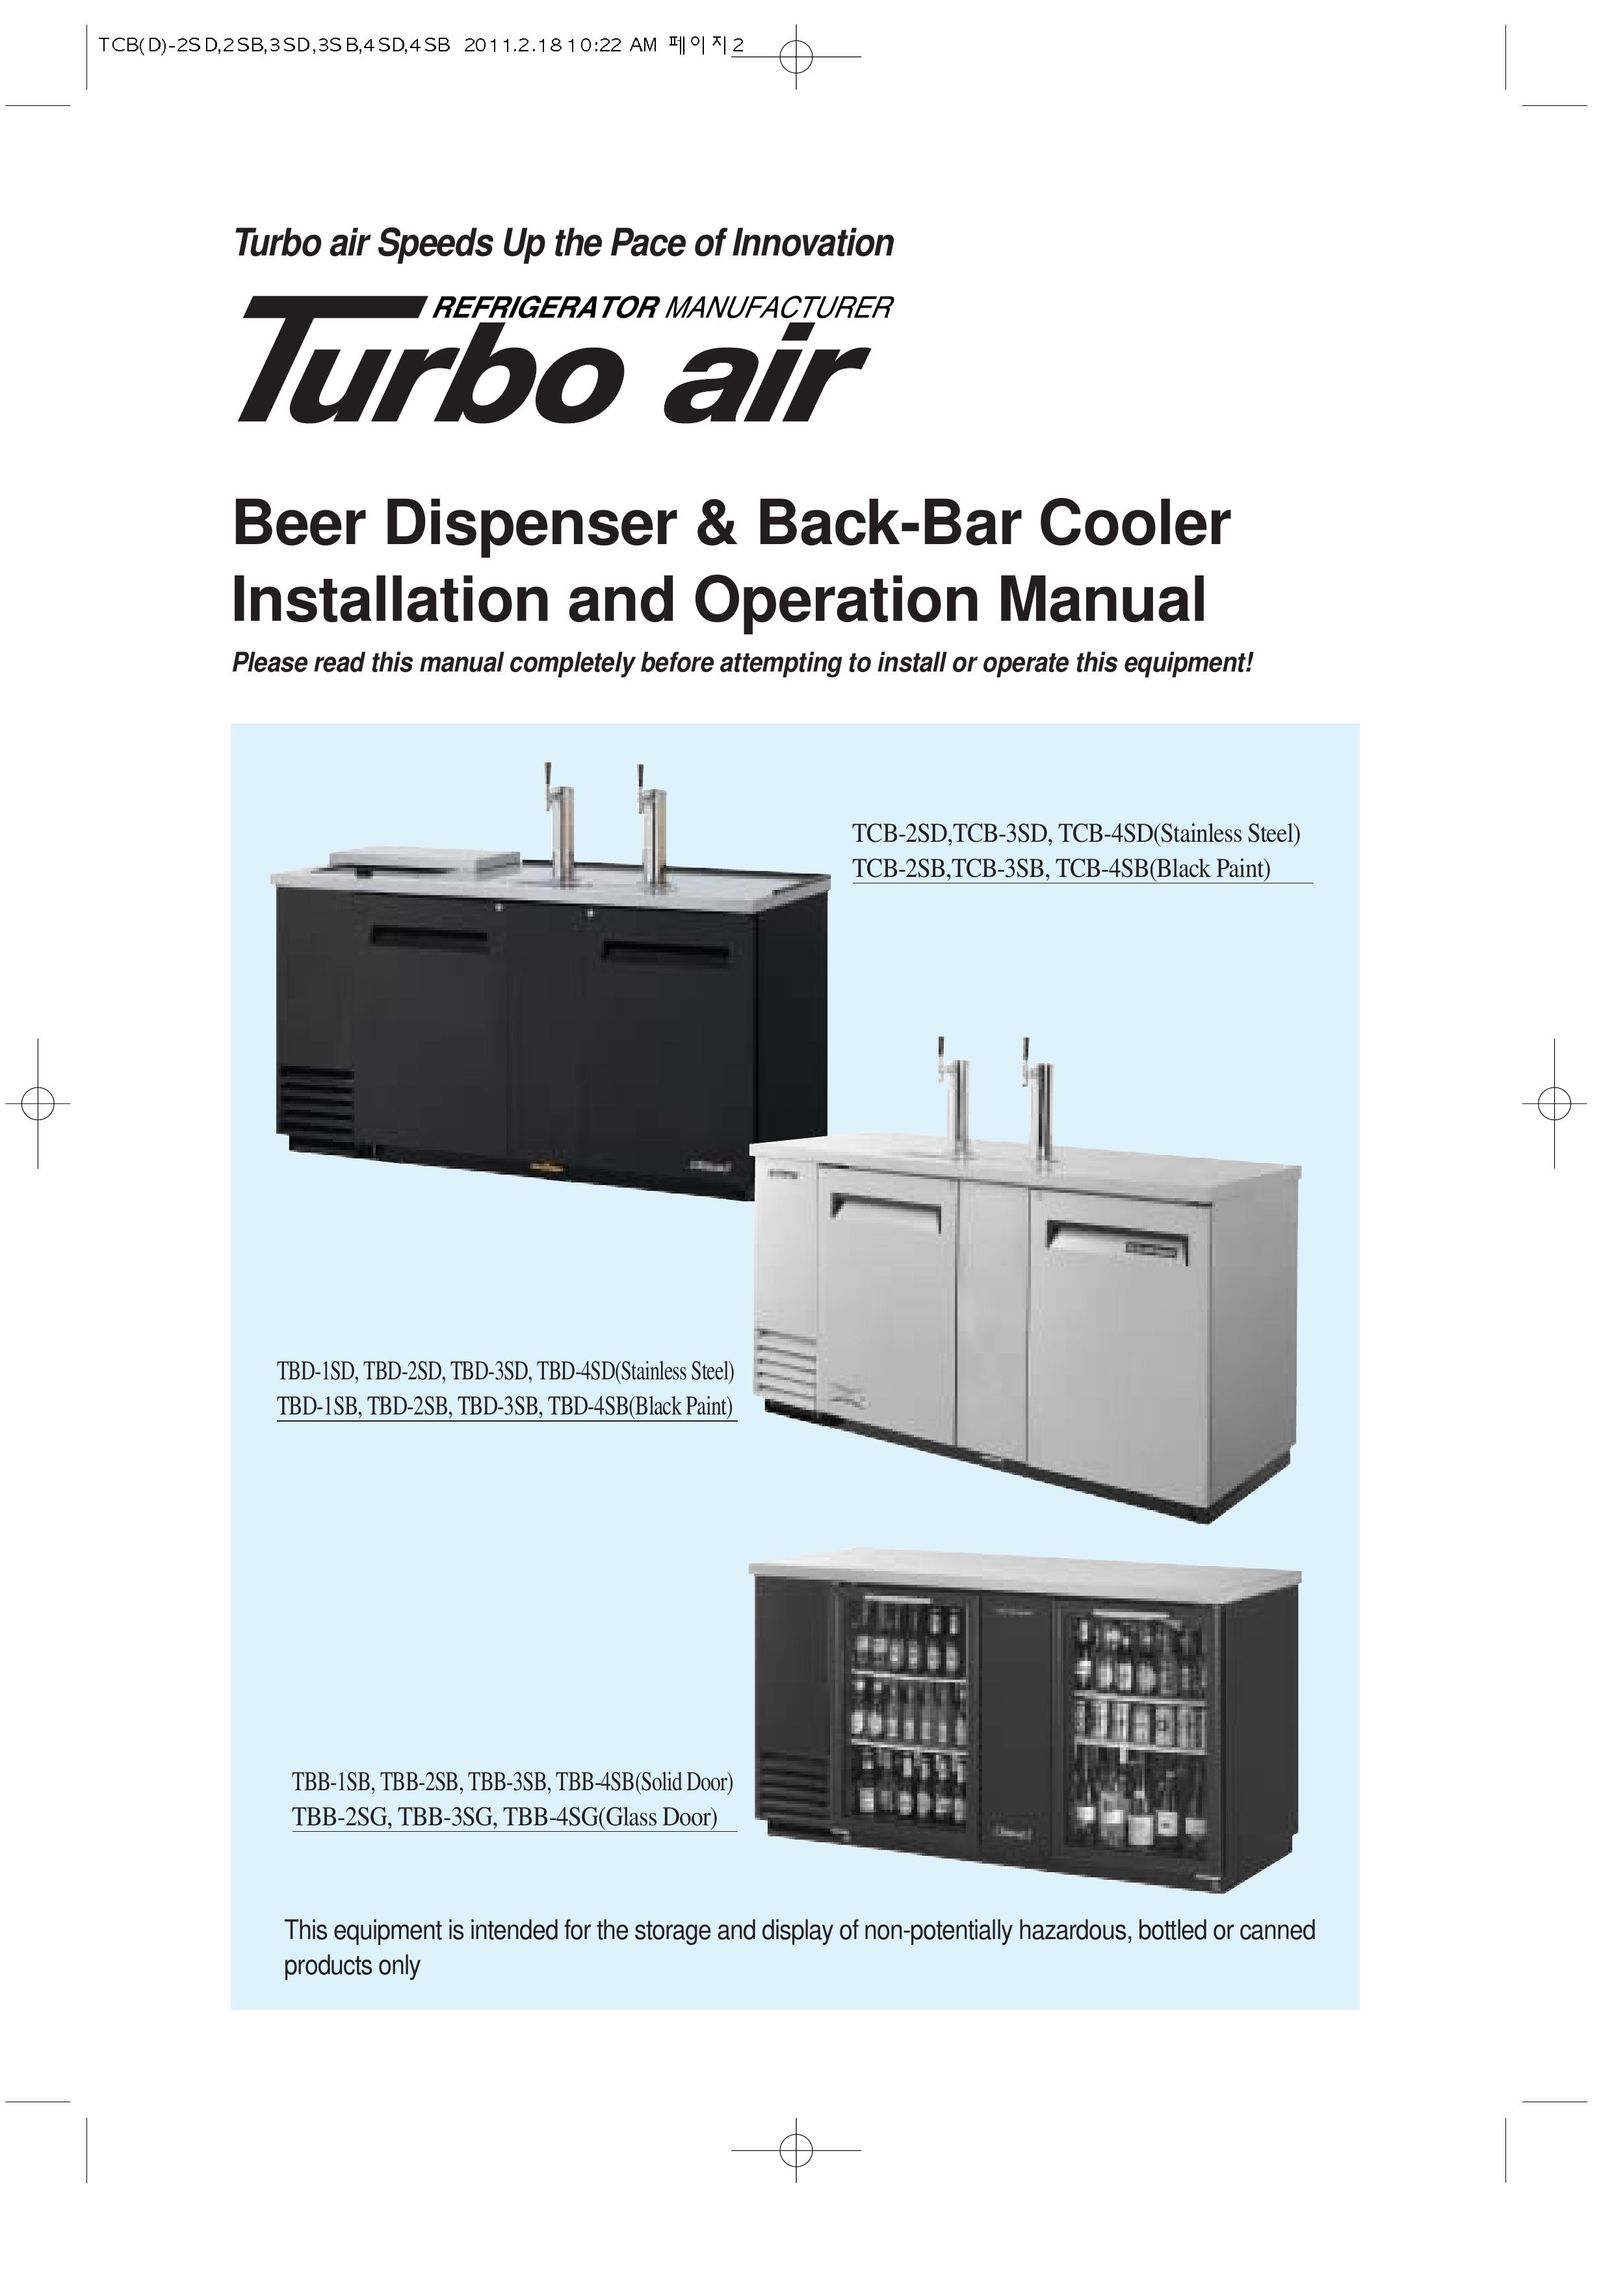 Turbo Air TBD-1SD Beverage Dispenser User Manual